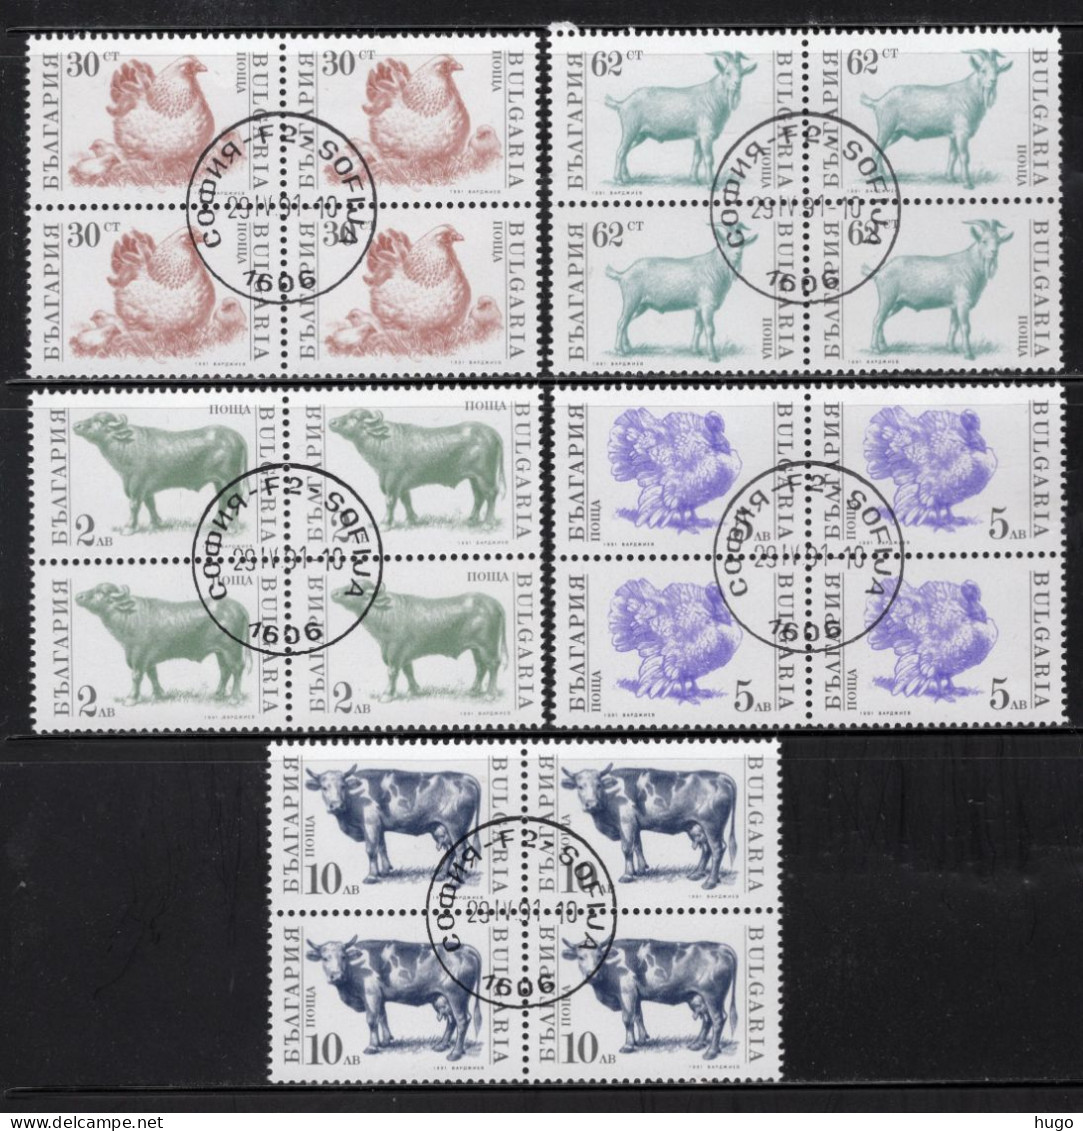 BULGARIJE Yt. 3358/3362° Gestempeld  4 St.1991 - Used Stamps